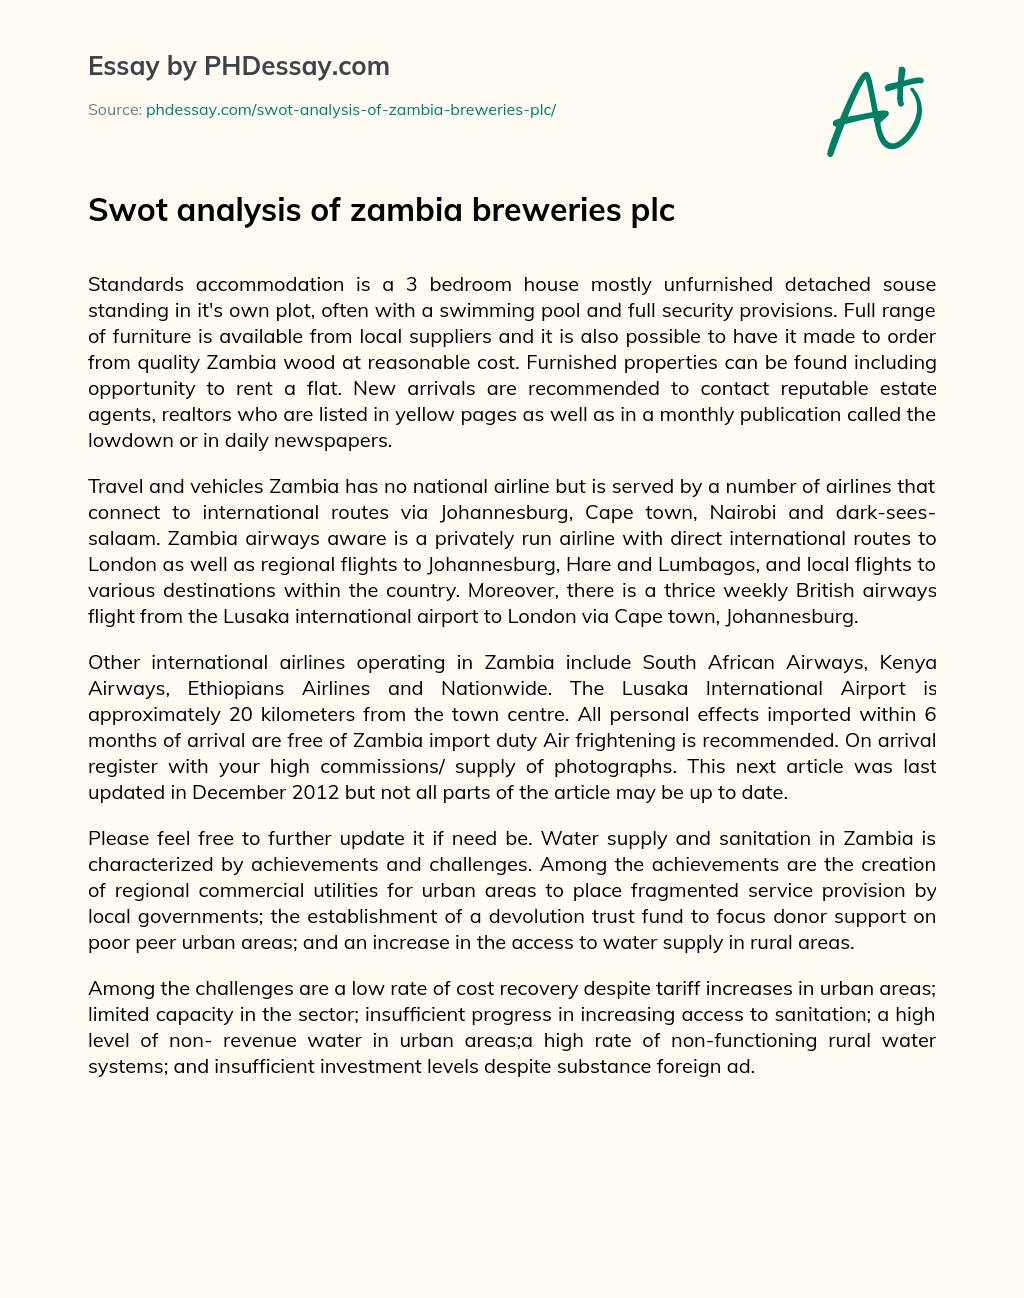 Swot analysis of zambia breweries plc essay